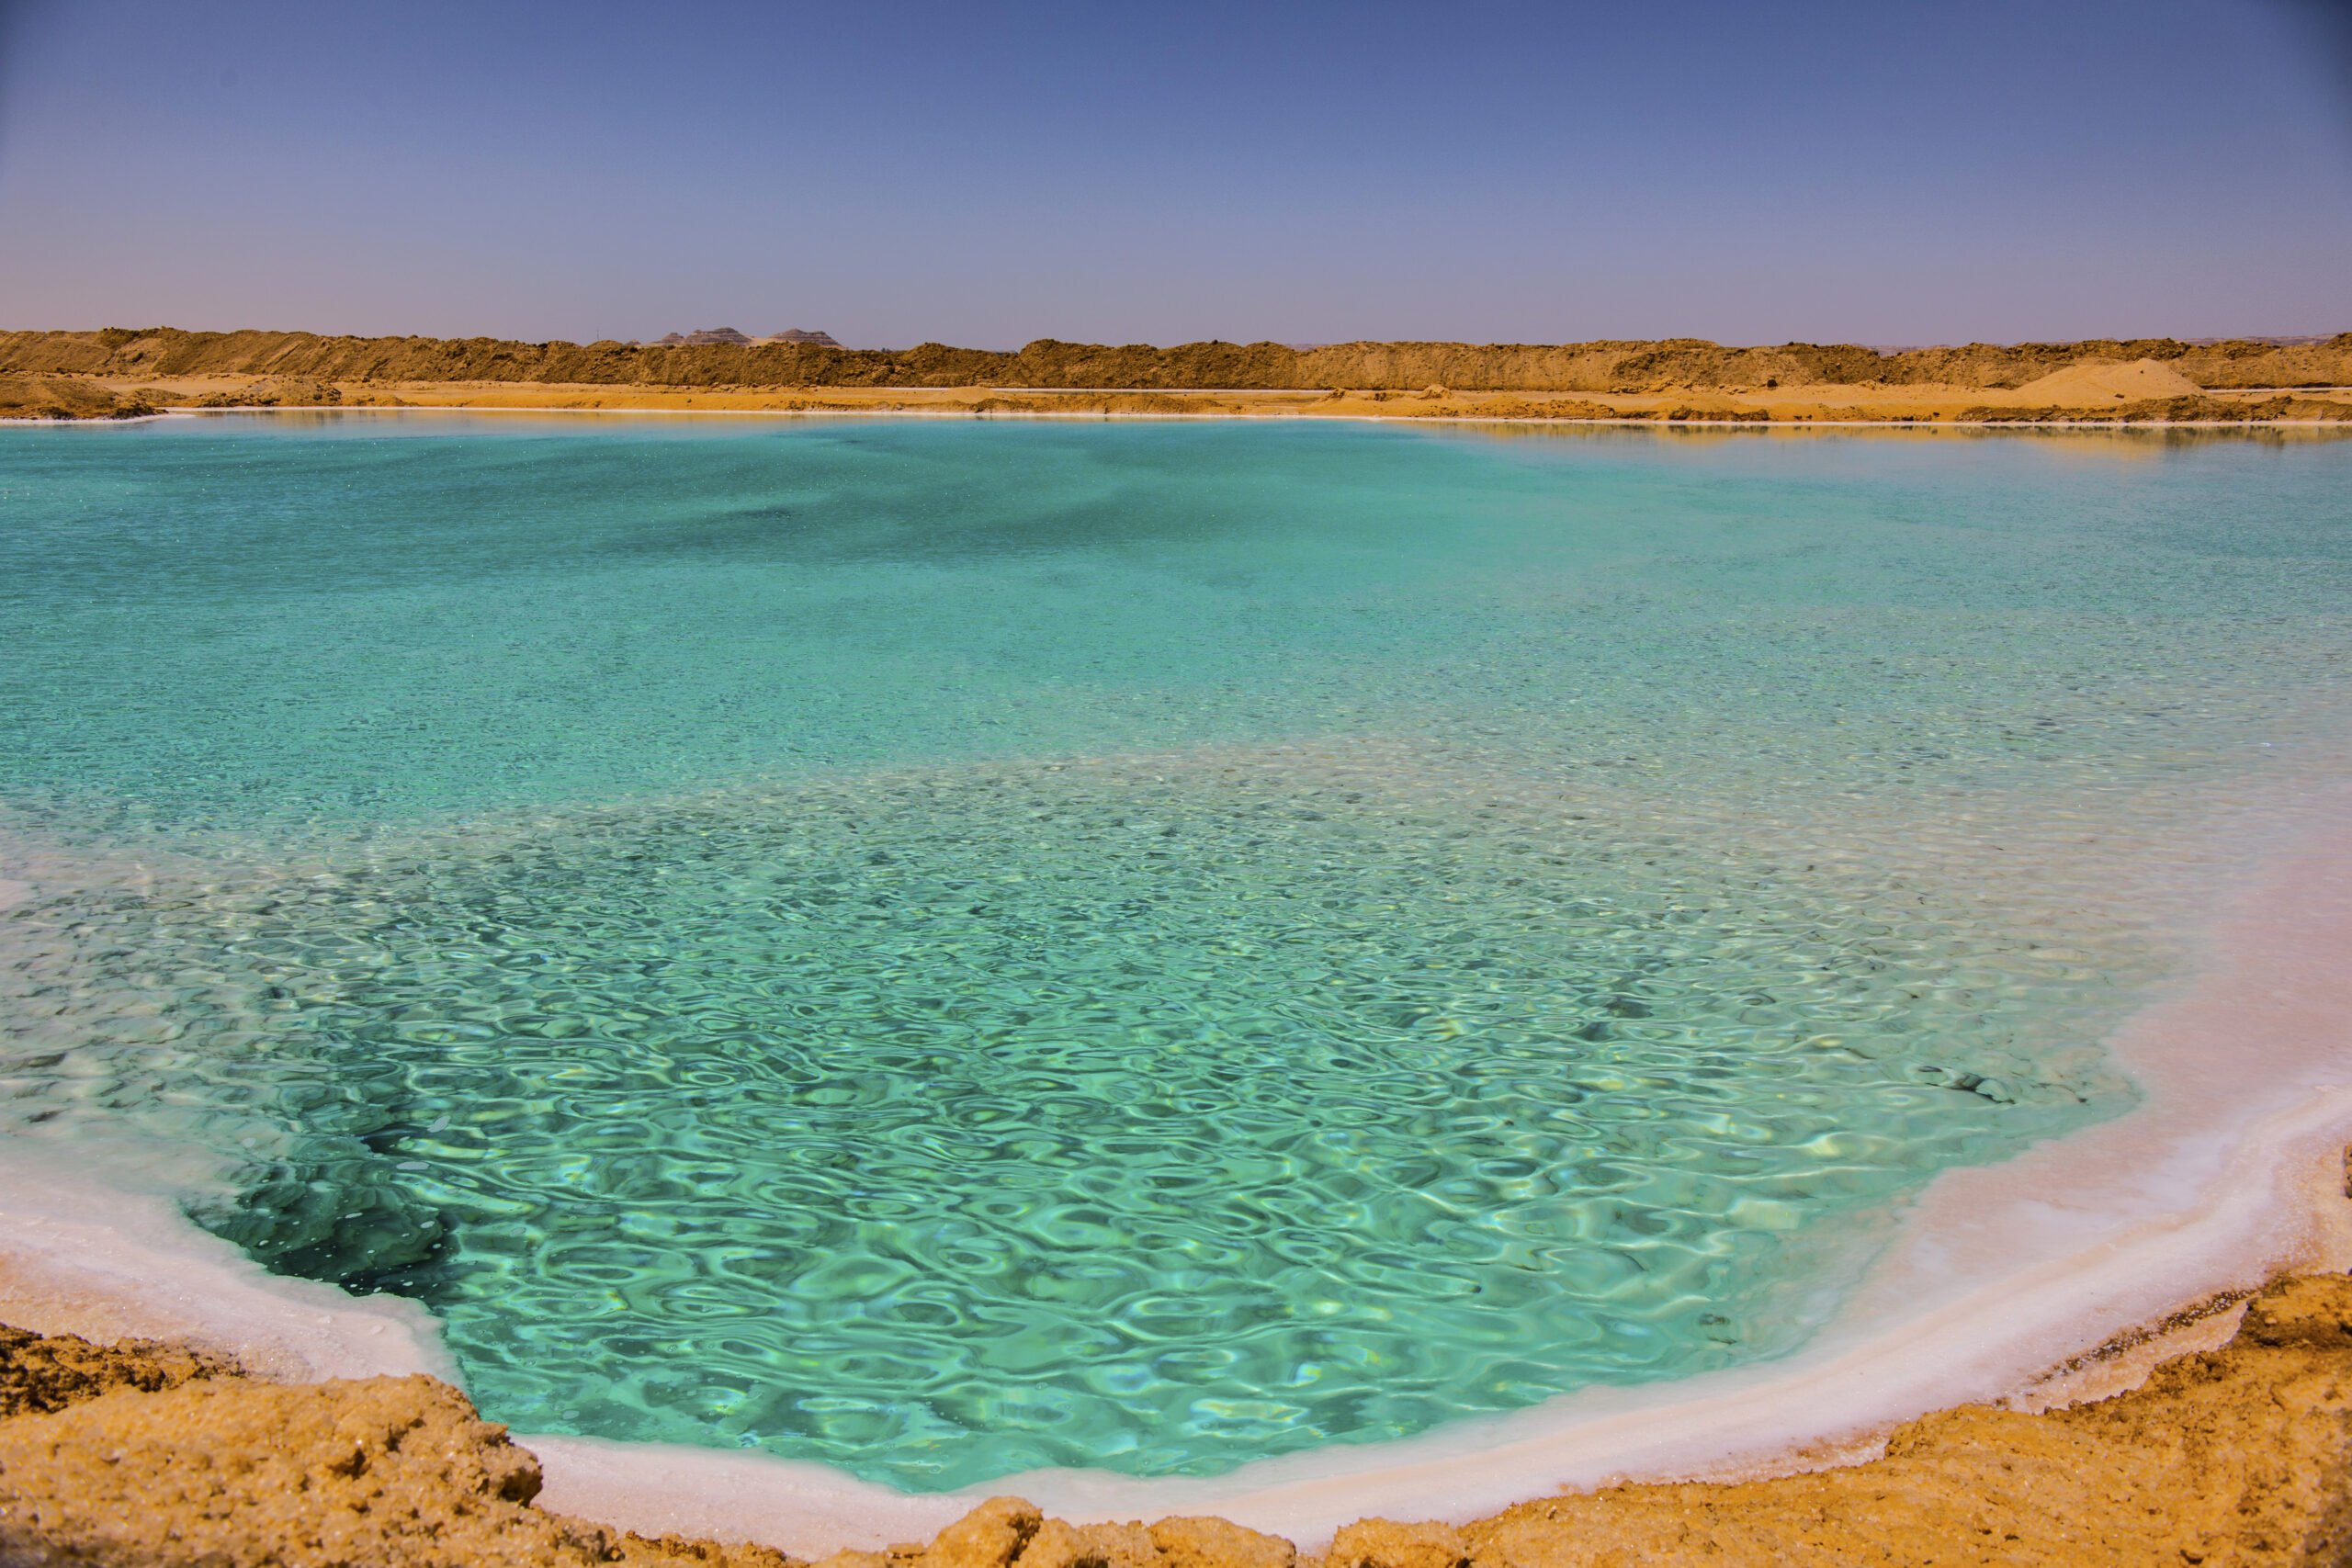 salt-lake-with-turquoise-water-white-salt-shore-near-siwa-oasis-egypt